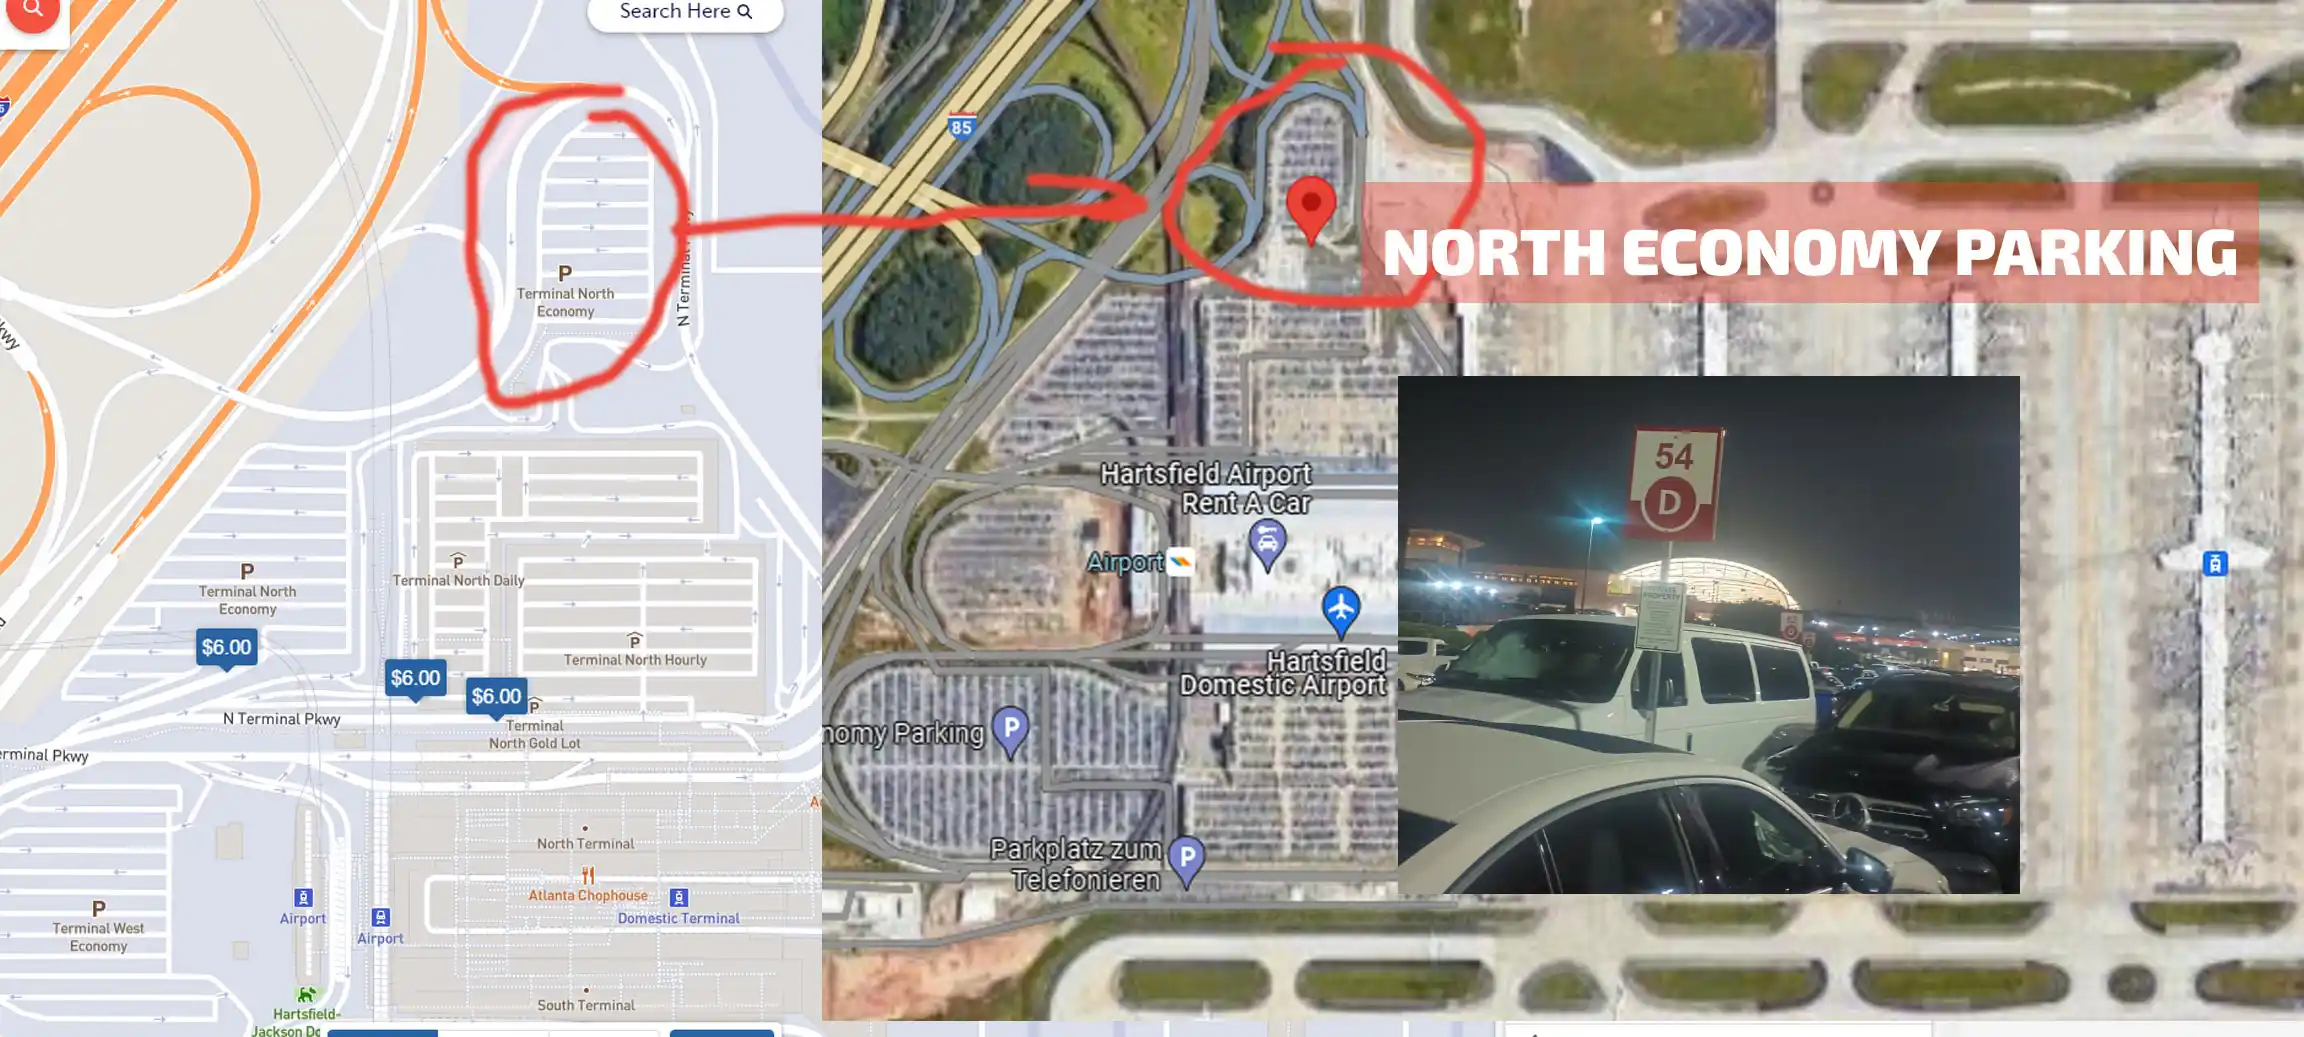 North economy Parking atlanta airport